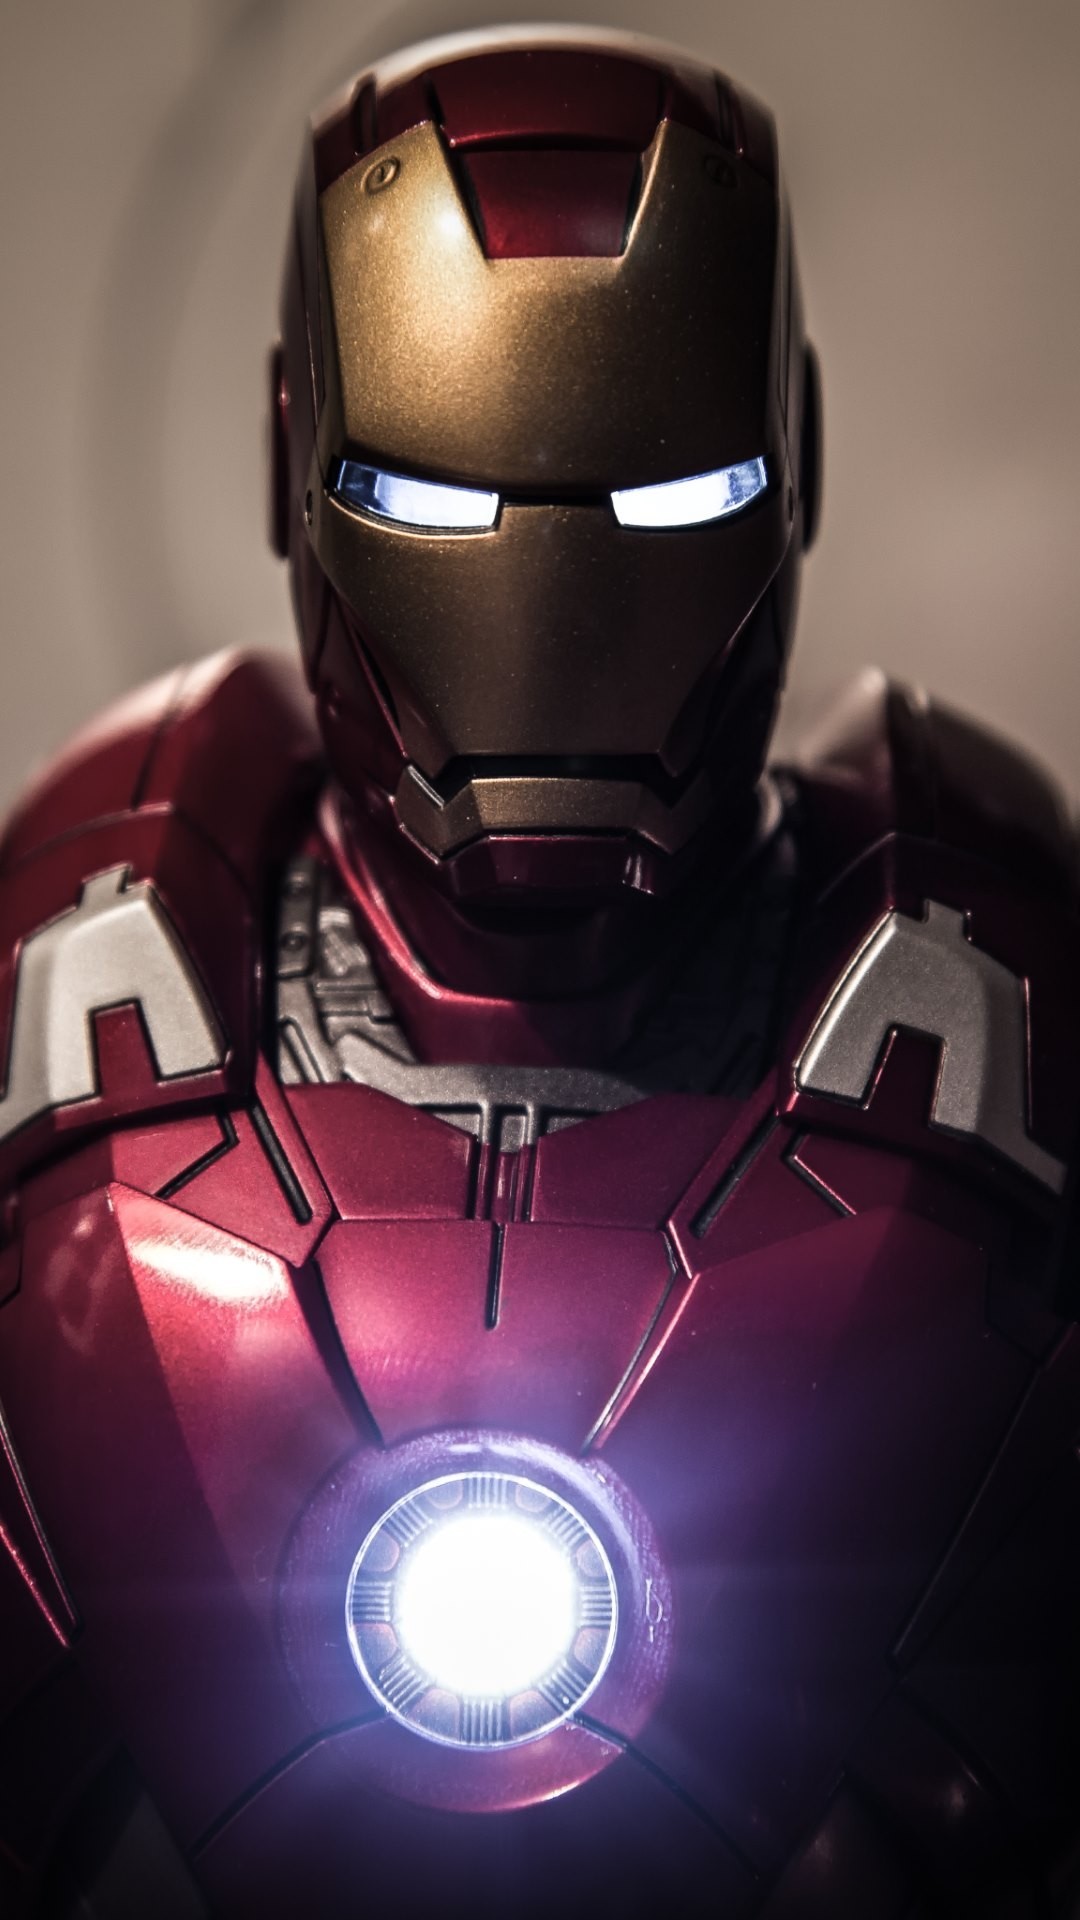 iron man wallpaper for iphone 6,helmet,iron man,fictional character,superhero,personal protective equipment